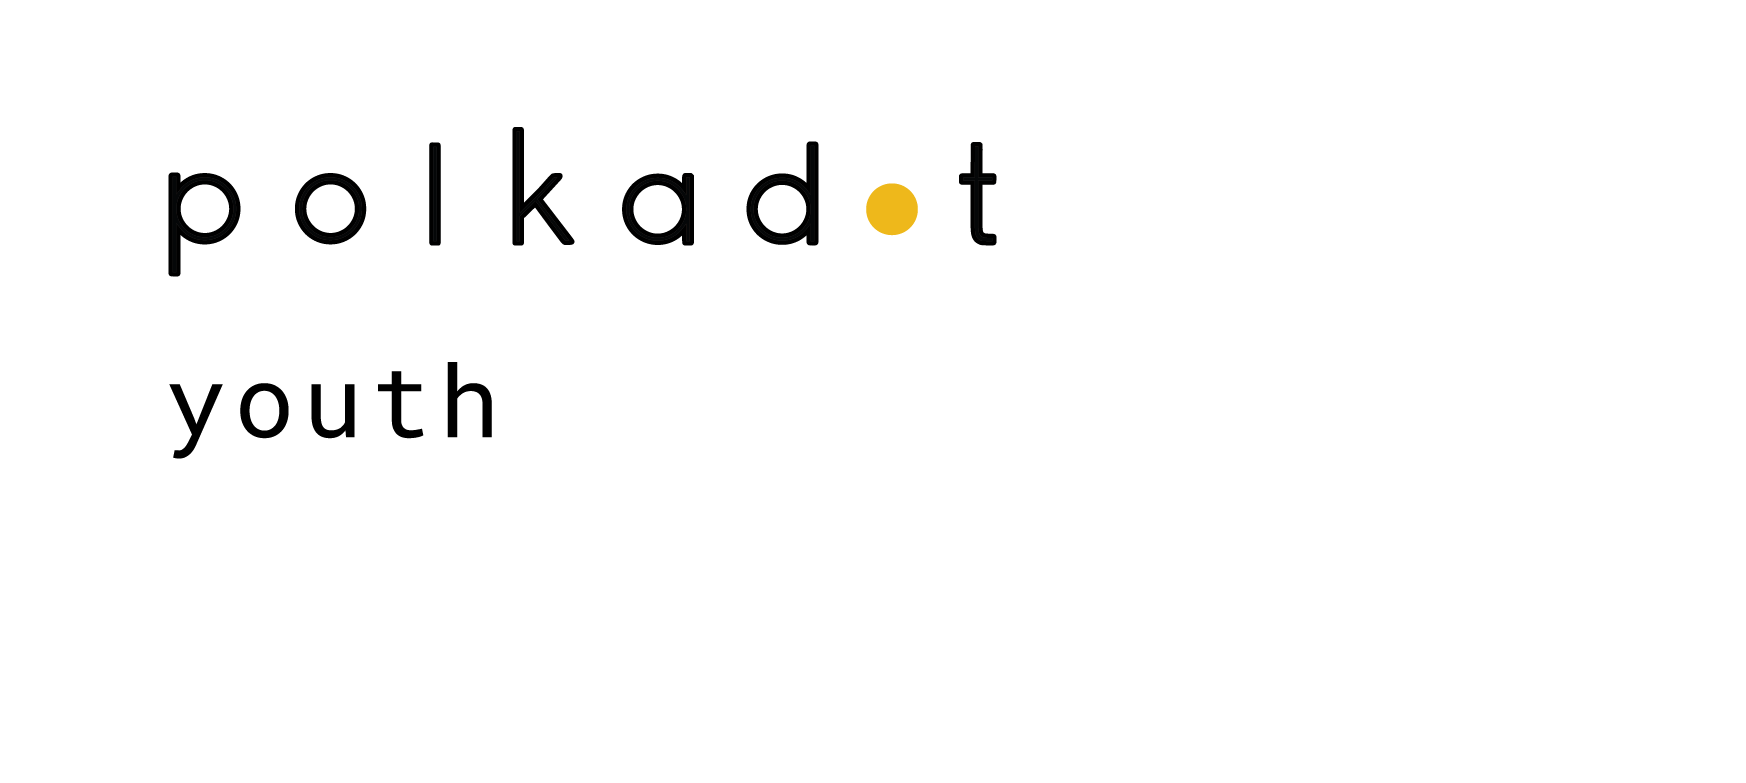 polkadot youth productions logo